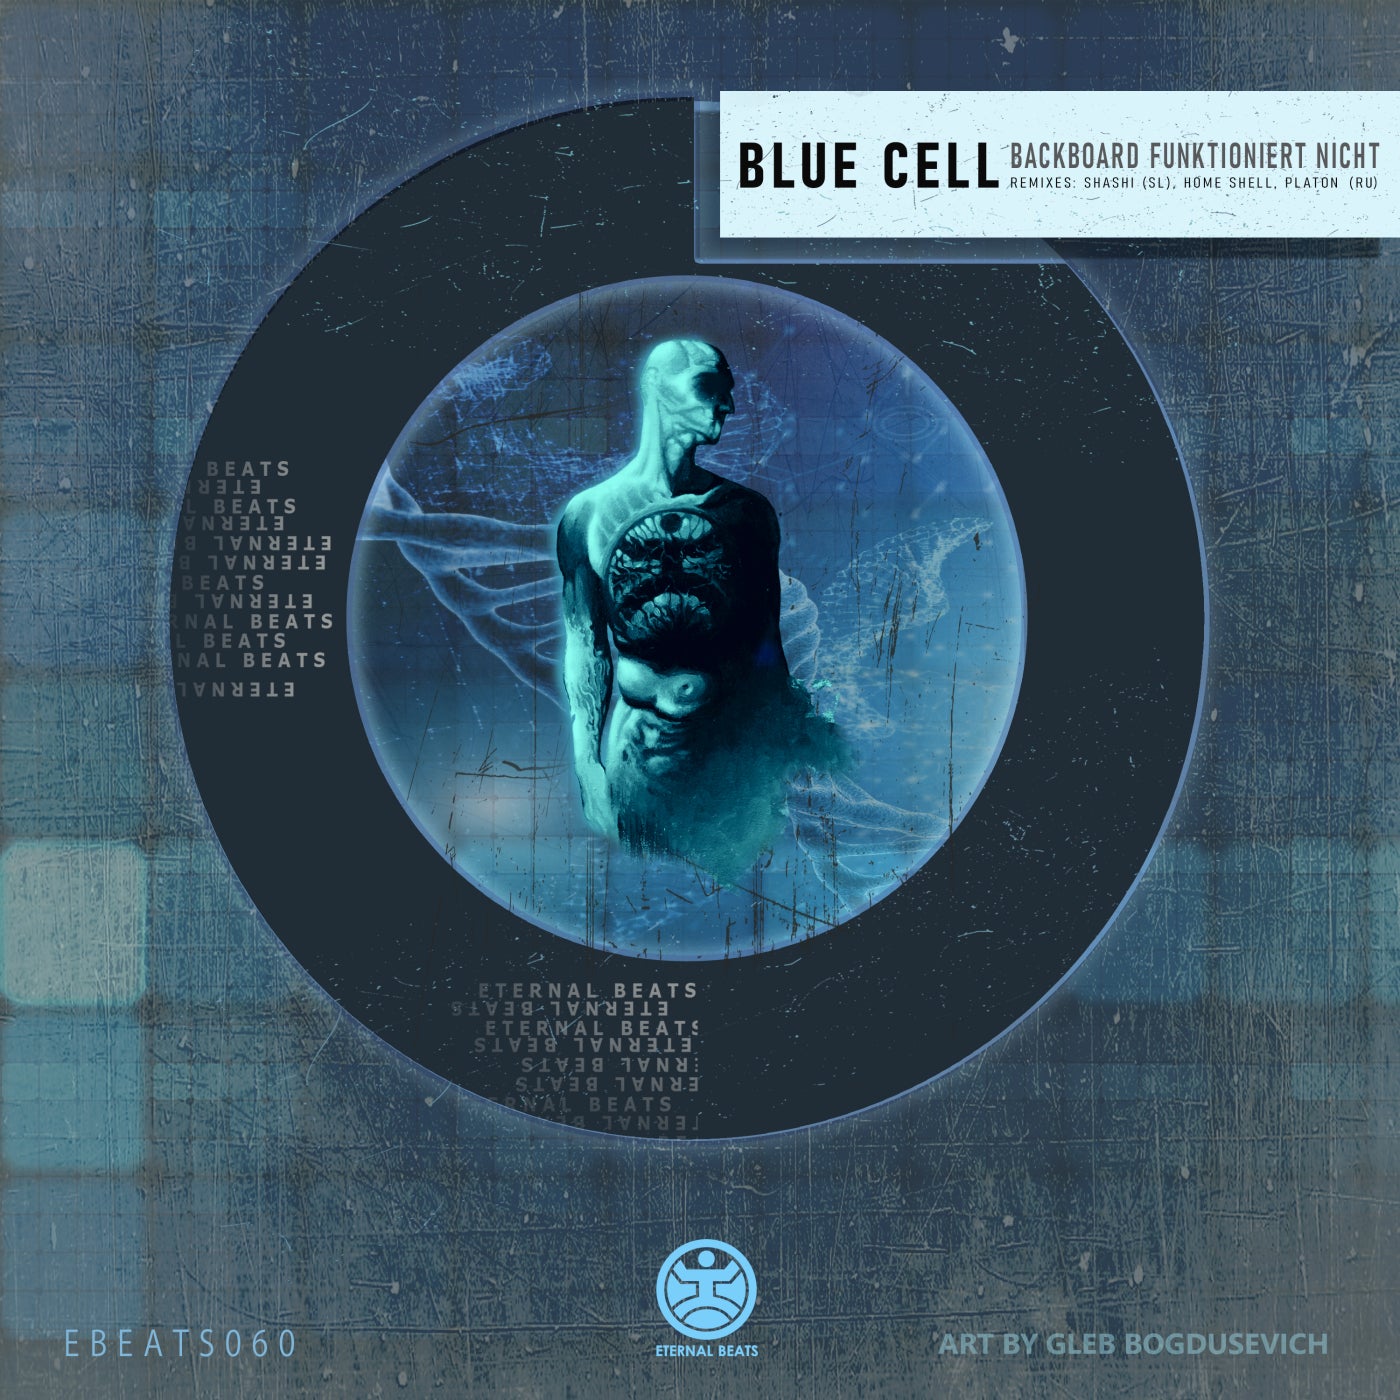 Blue Cell, SHASHI (SL) – Backboard Funktioniert Nicht [EBEATS060]